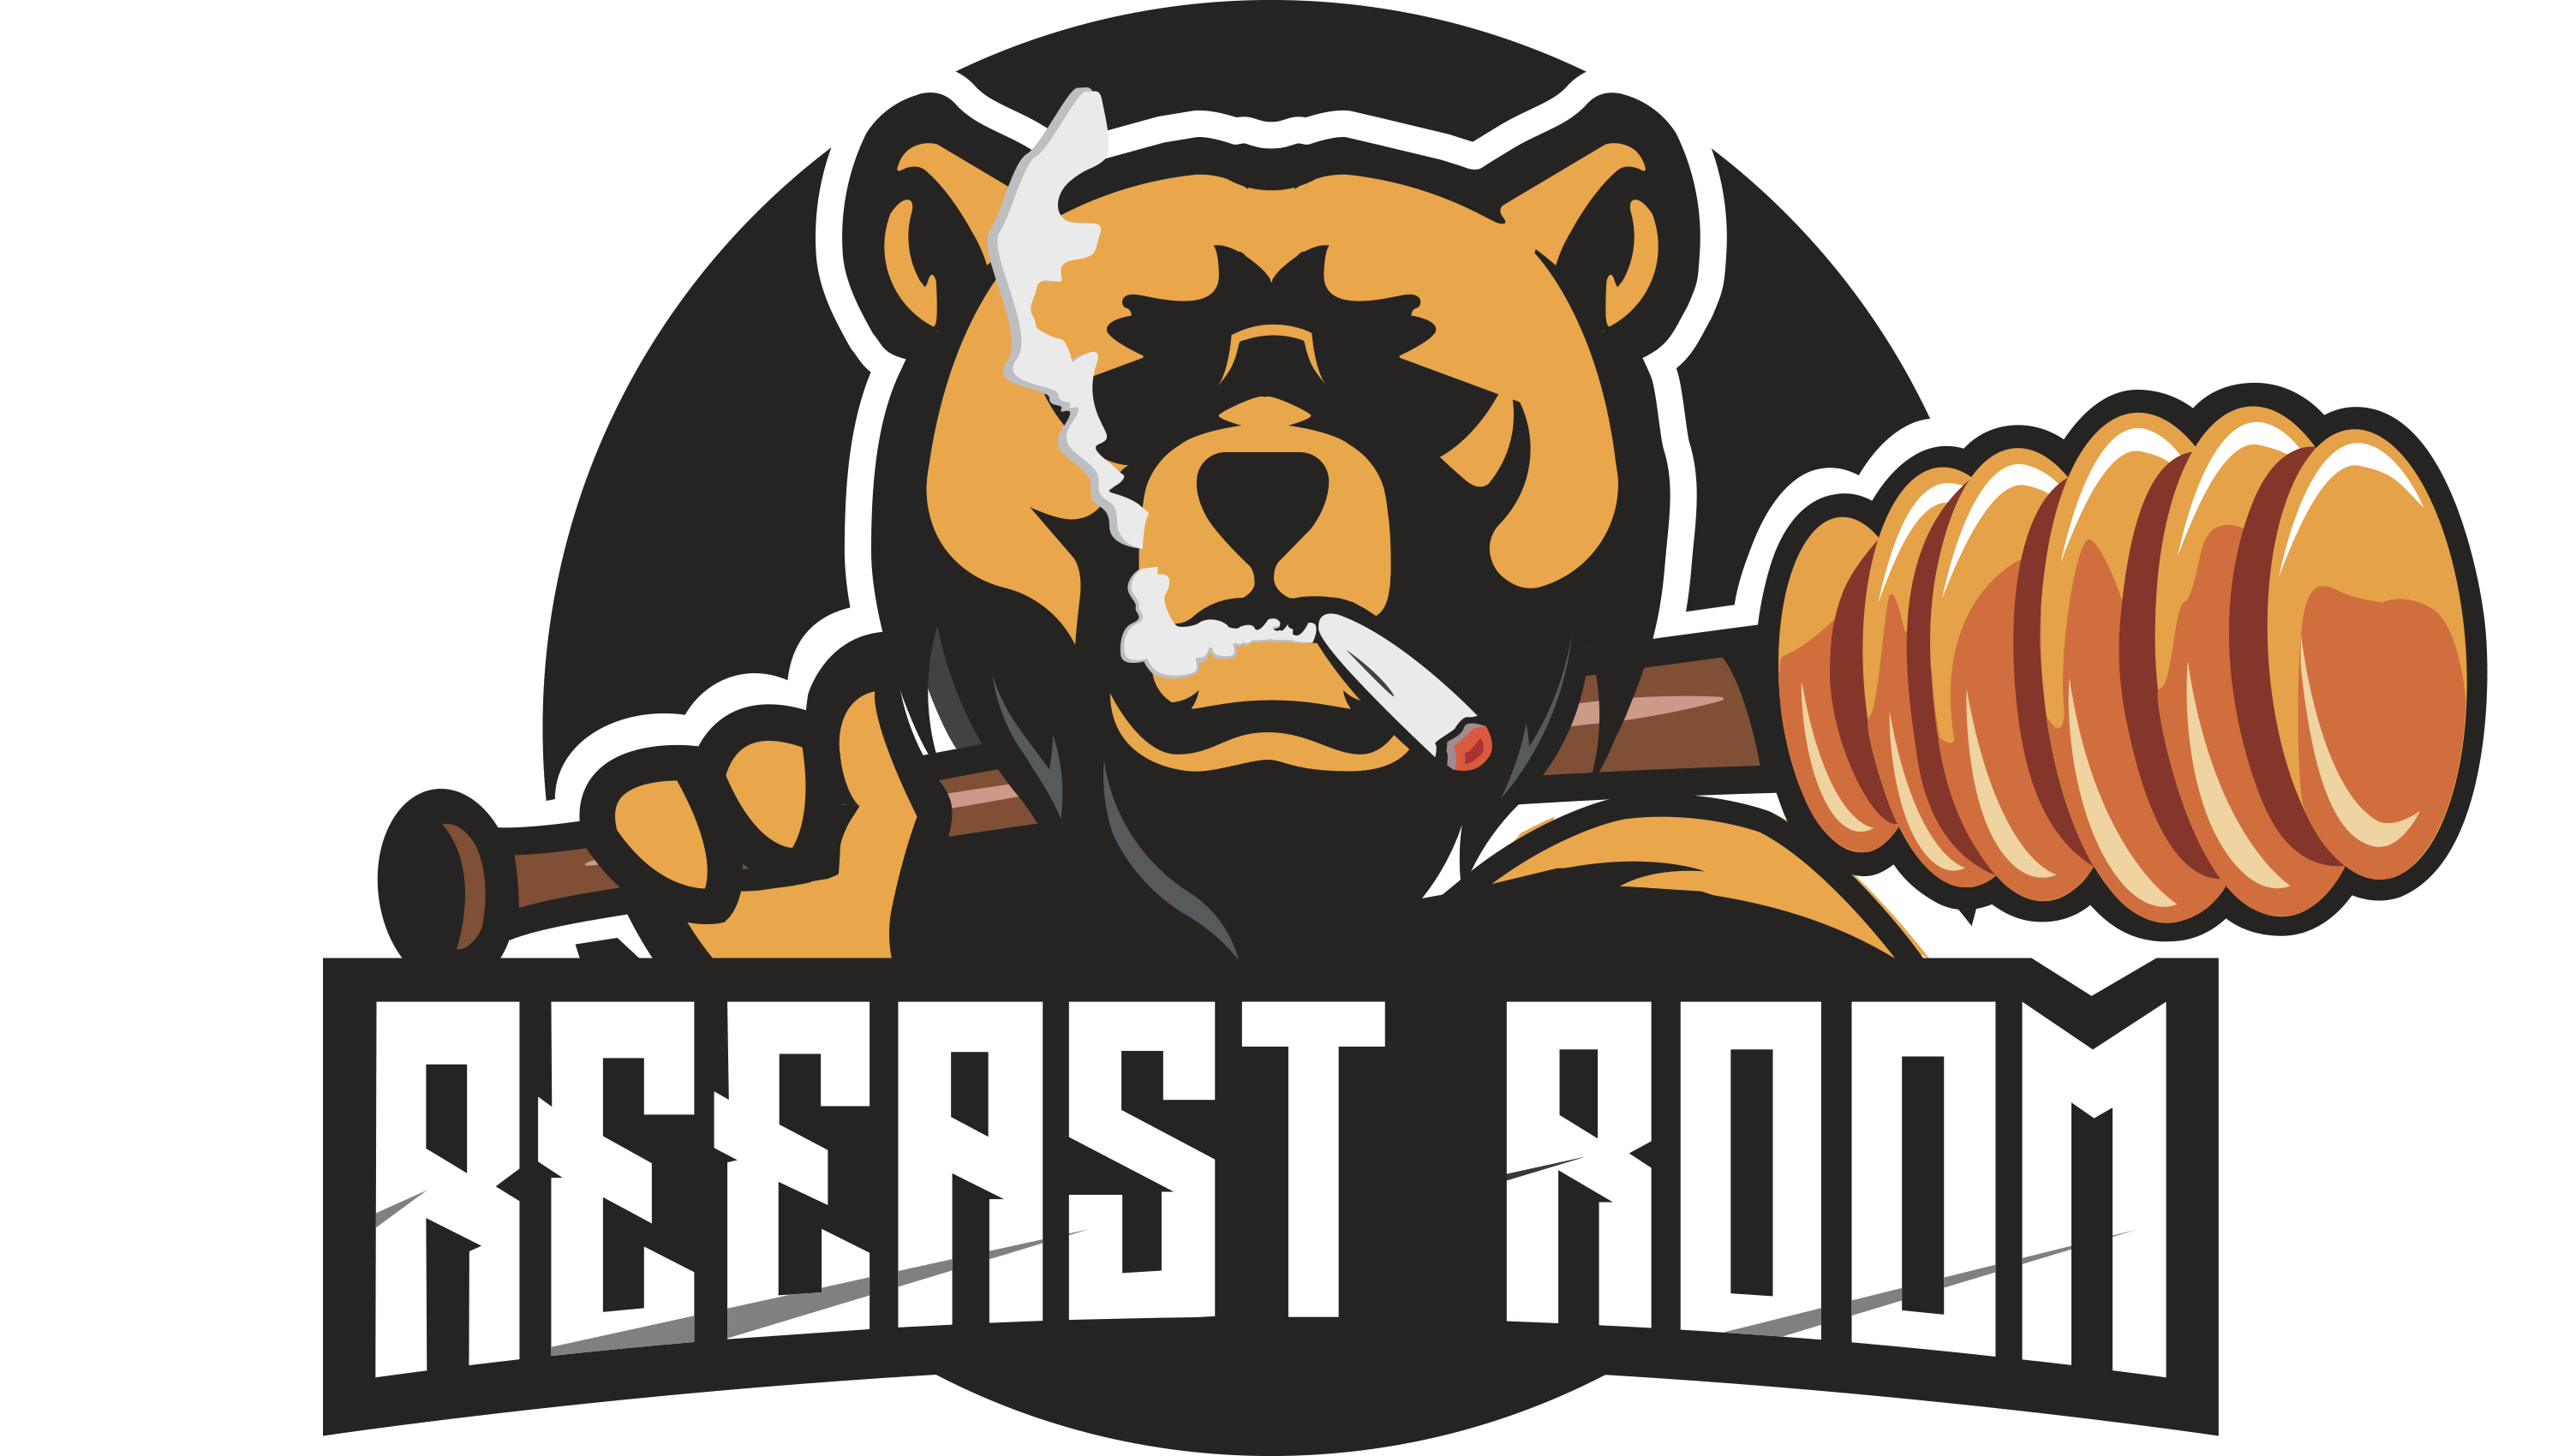 REEASTROOMの公式ロゴ